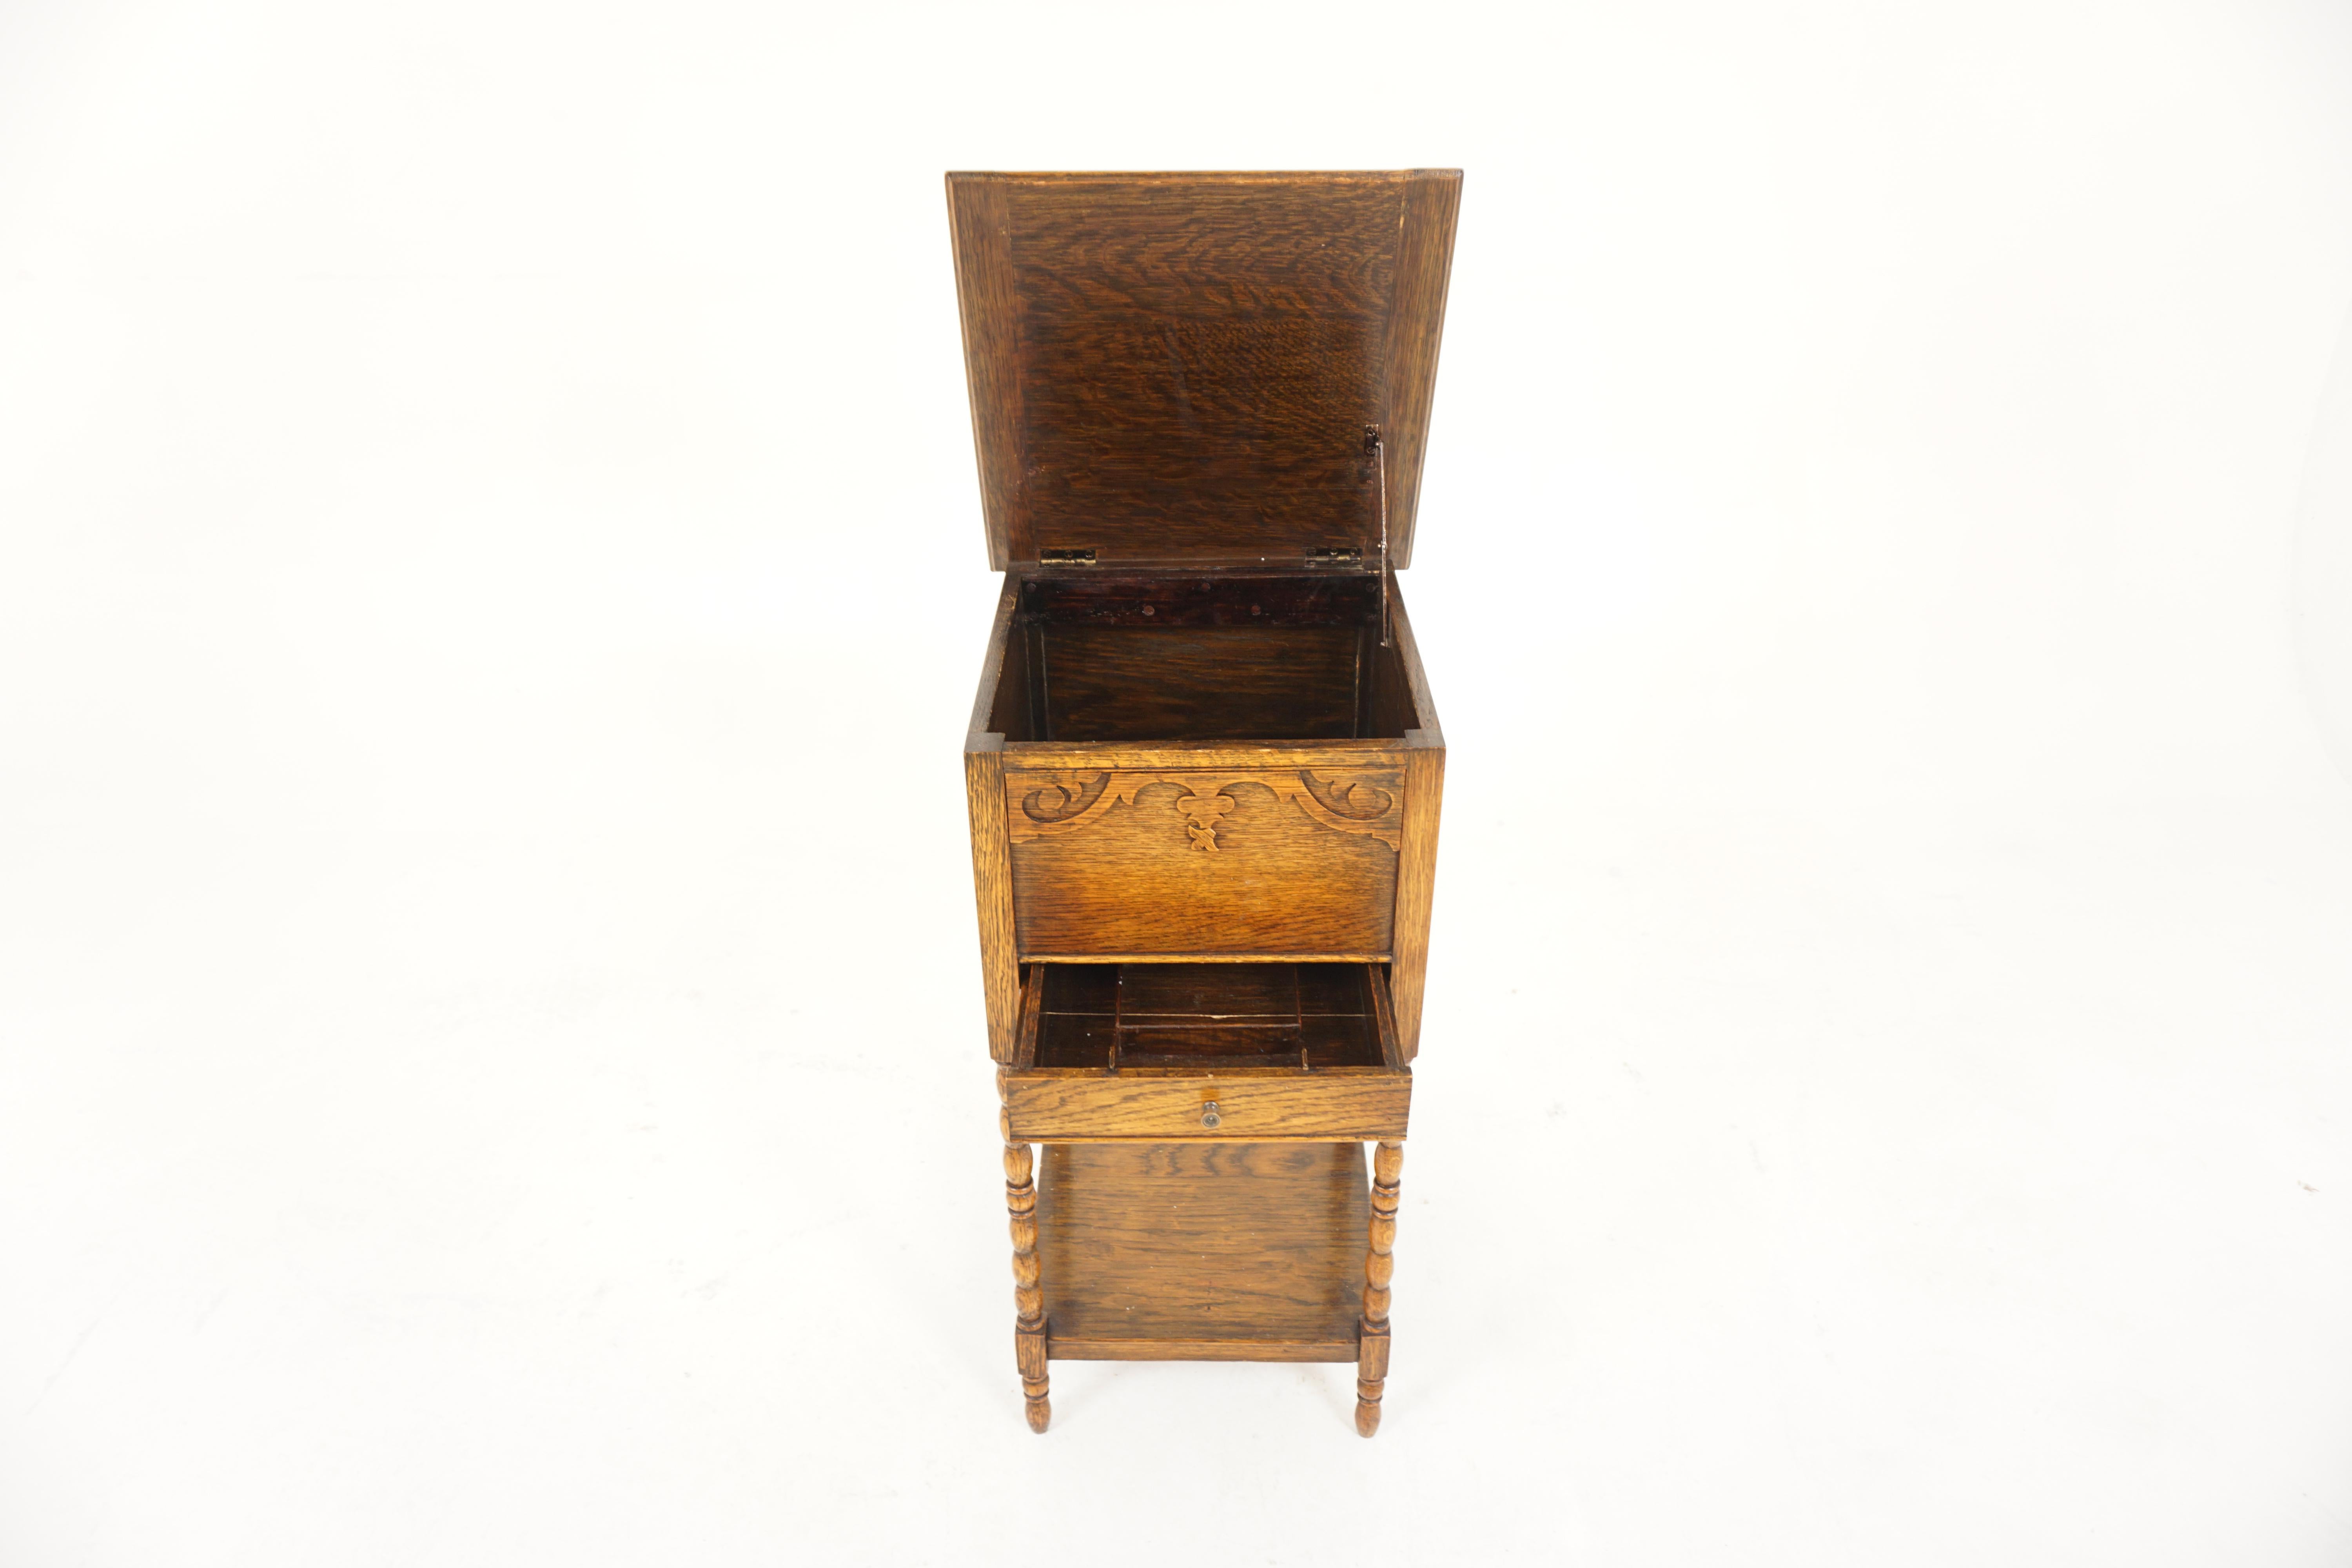 20th Century Antique Tiger Oak Lift Up Sewing Box, Lamp Table, Planter, Scotland 1920, H793